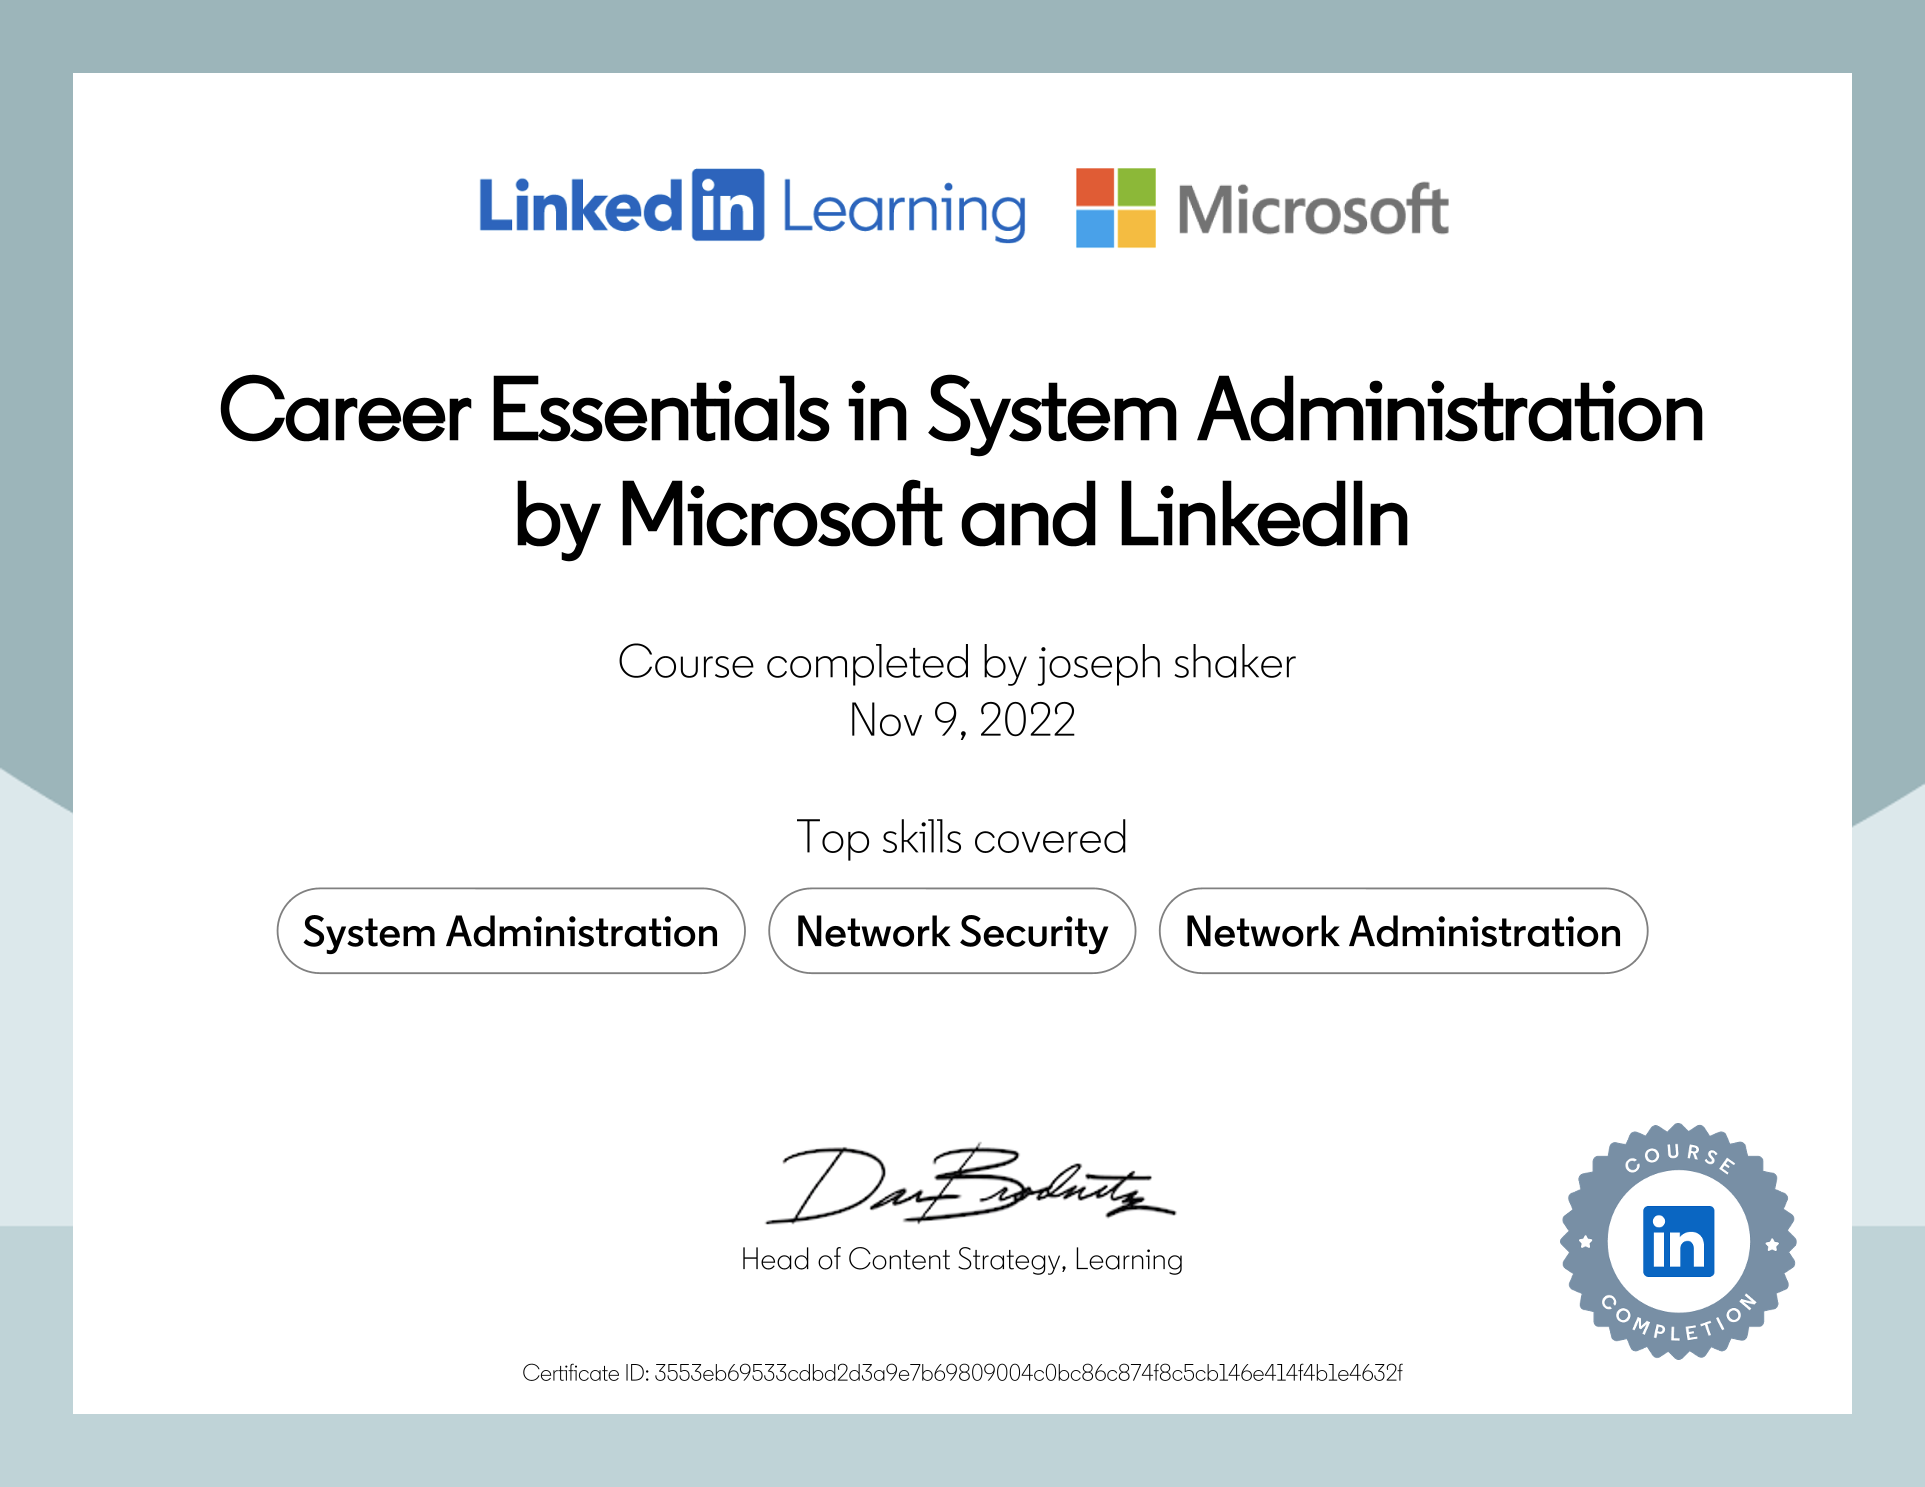 joseph shaker on LinkedIn: Certificate of Completion